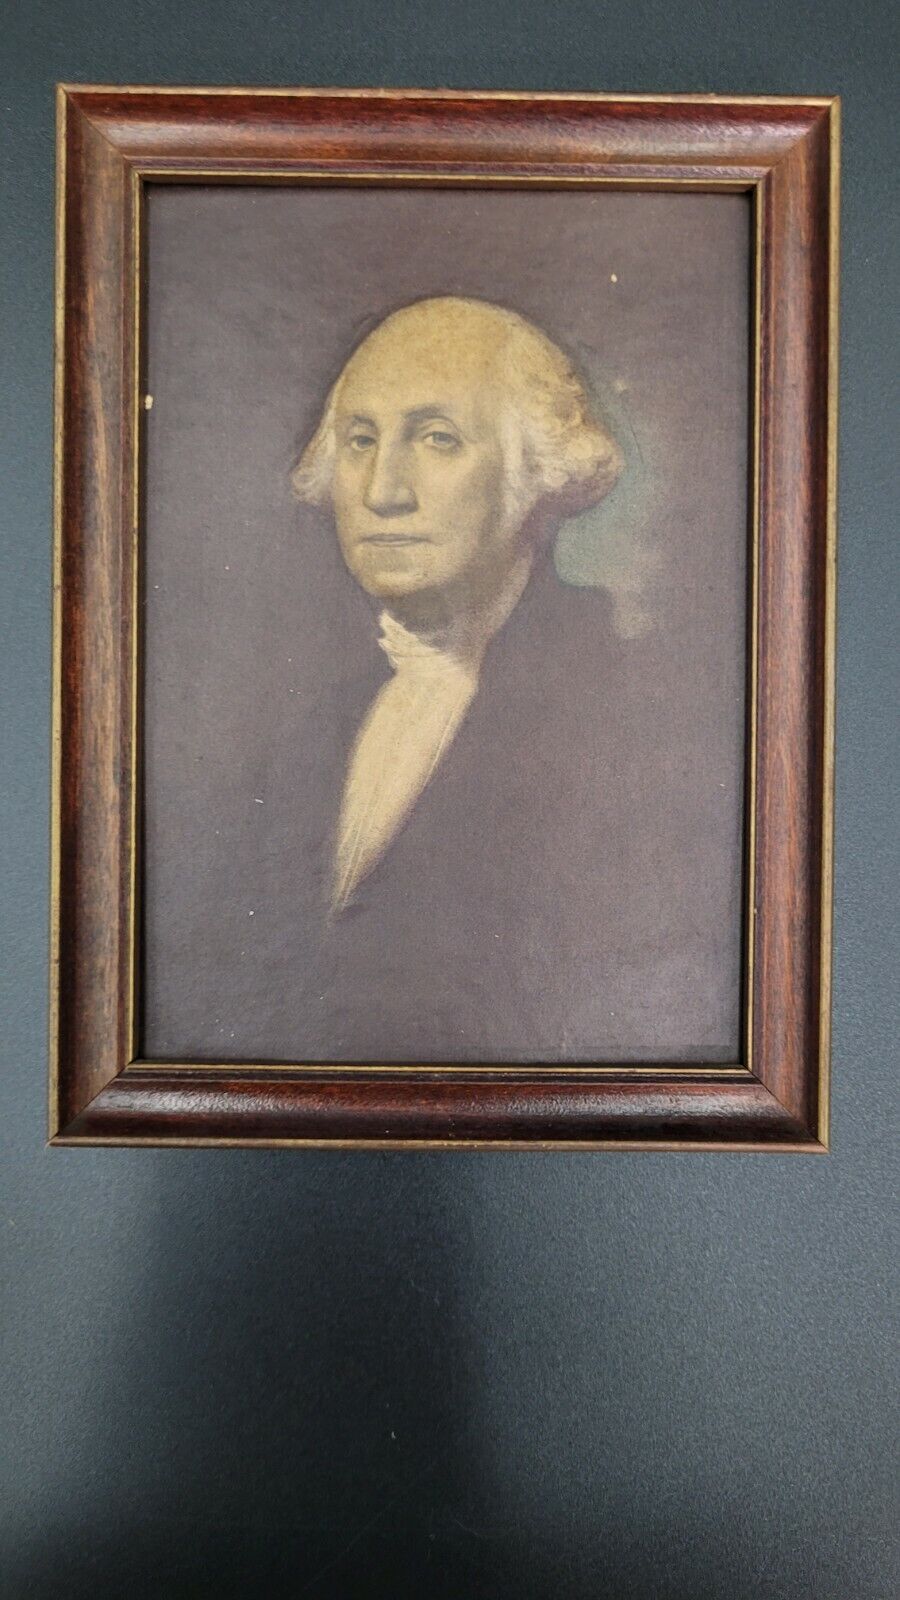 Vintage portrait President George Washington